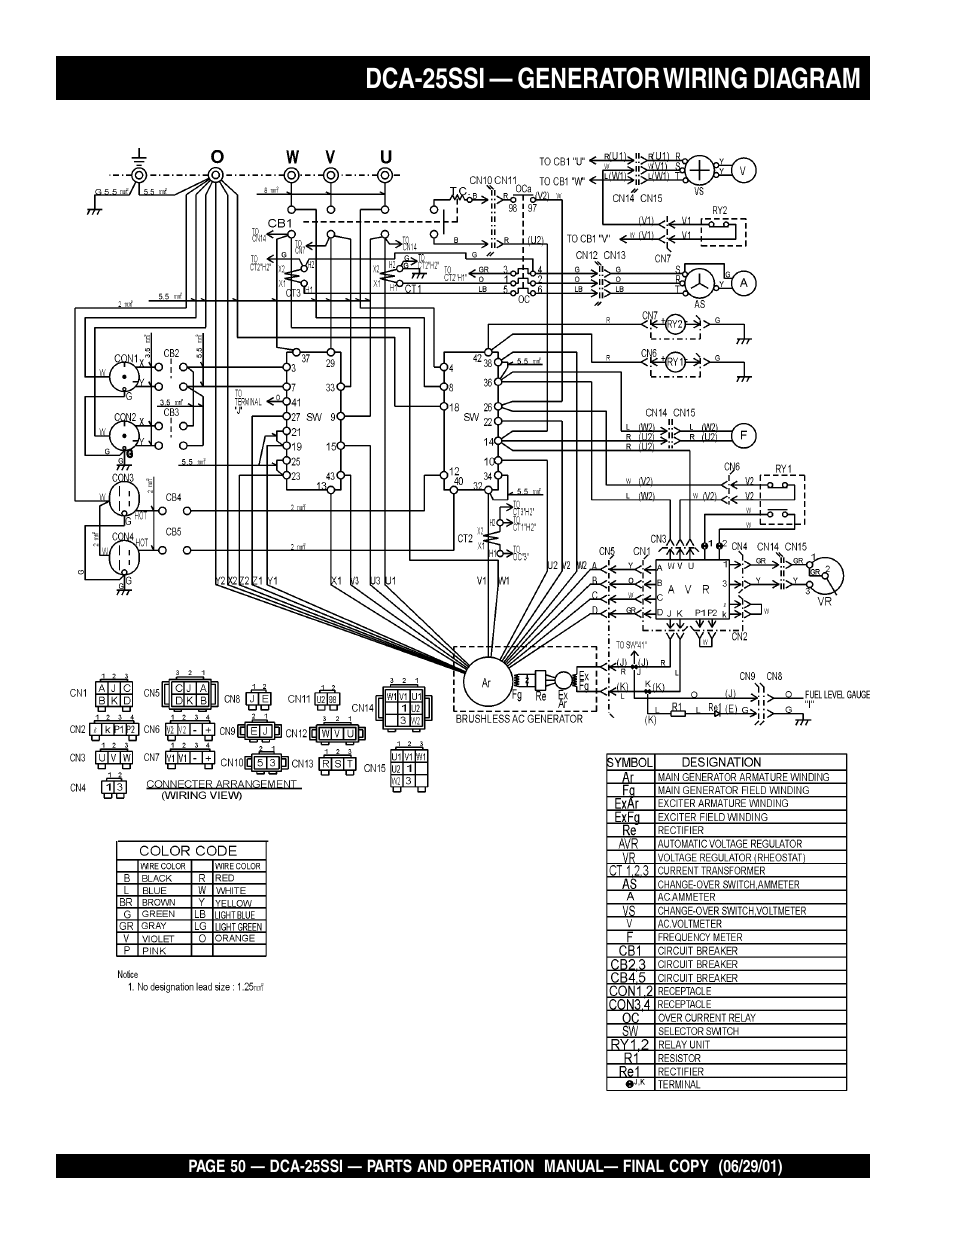 [DIAGRAM] Bmw G310gs User Wiring Diagram FULL Version HD Quality Wiring